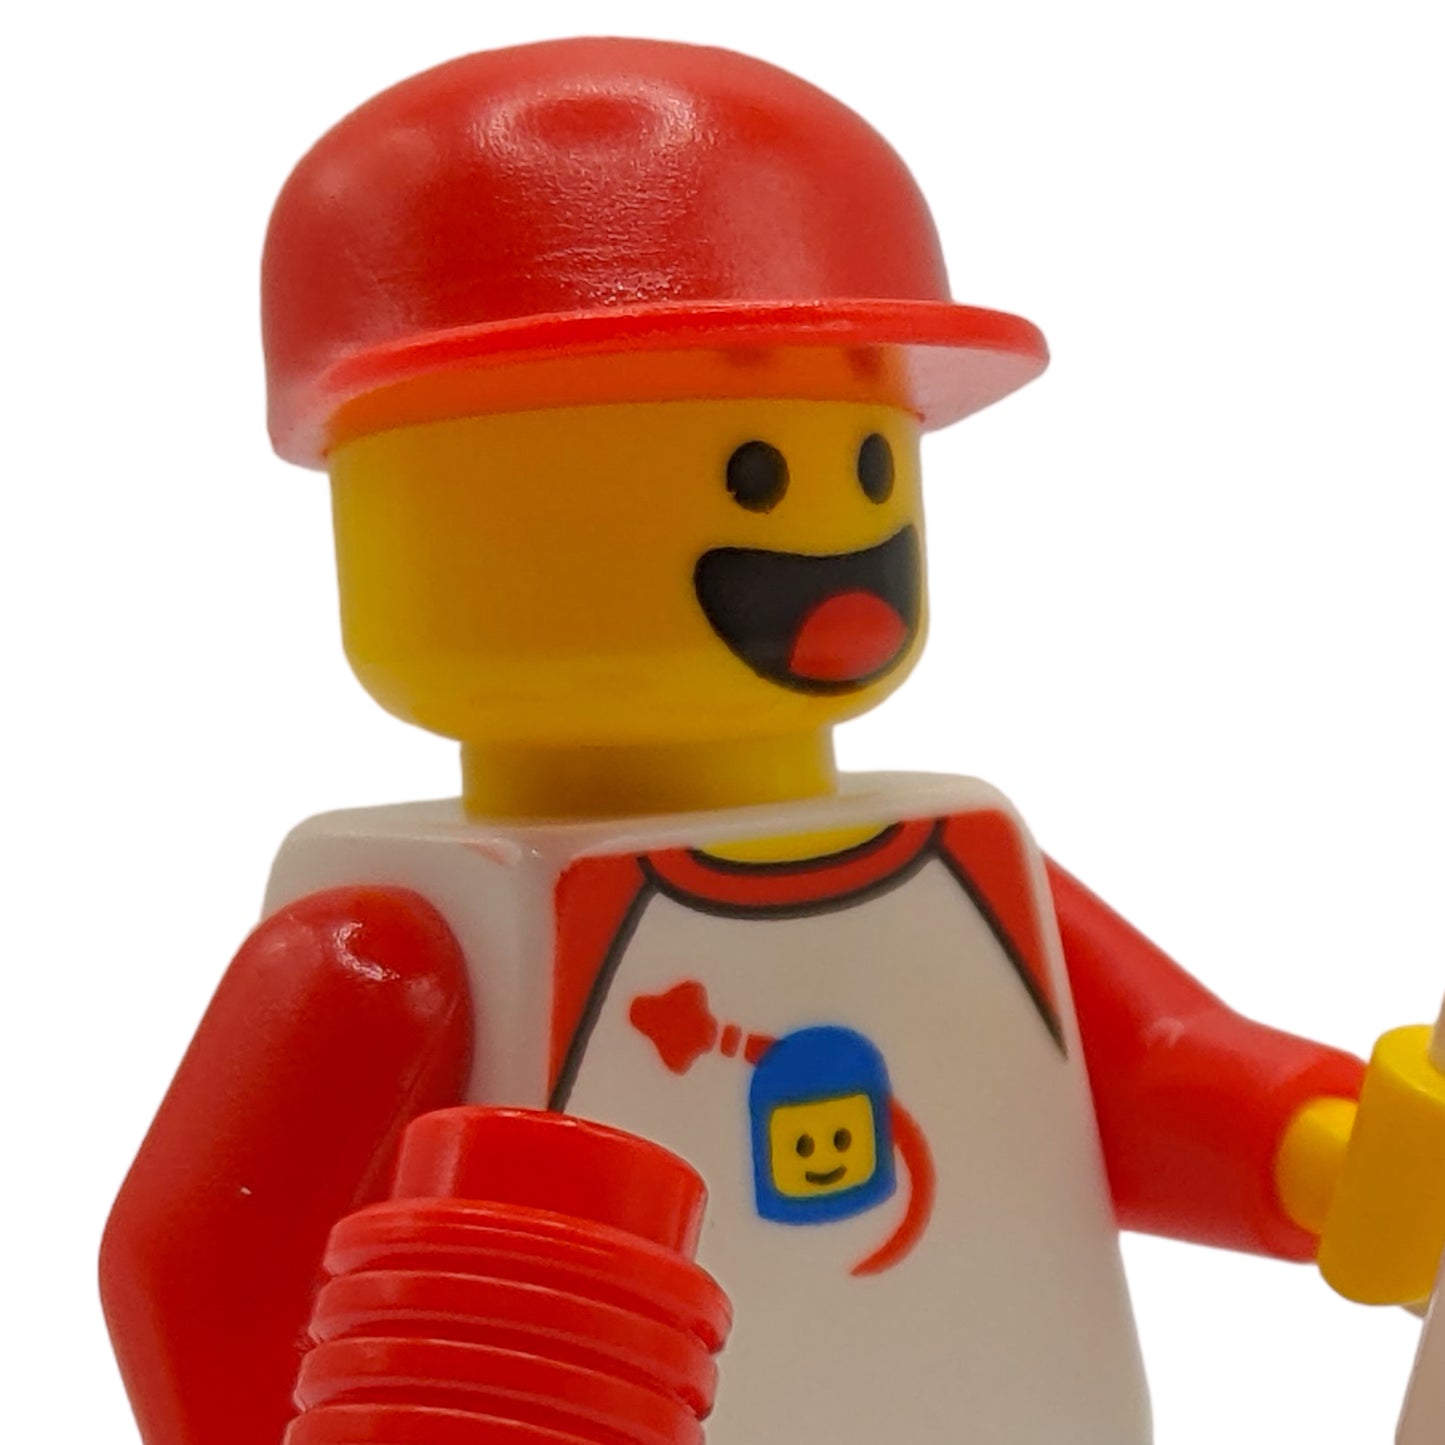 LEGO Minifigur - MB101 Mjaysbricks.de SigFig Classic Space Fan